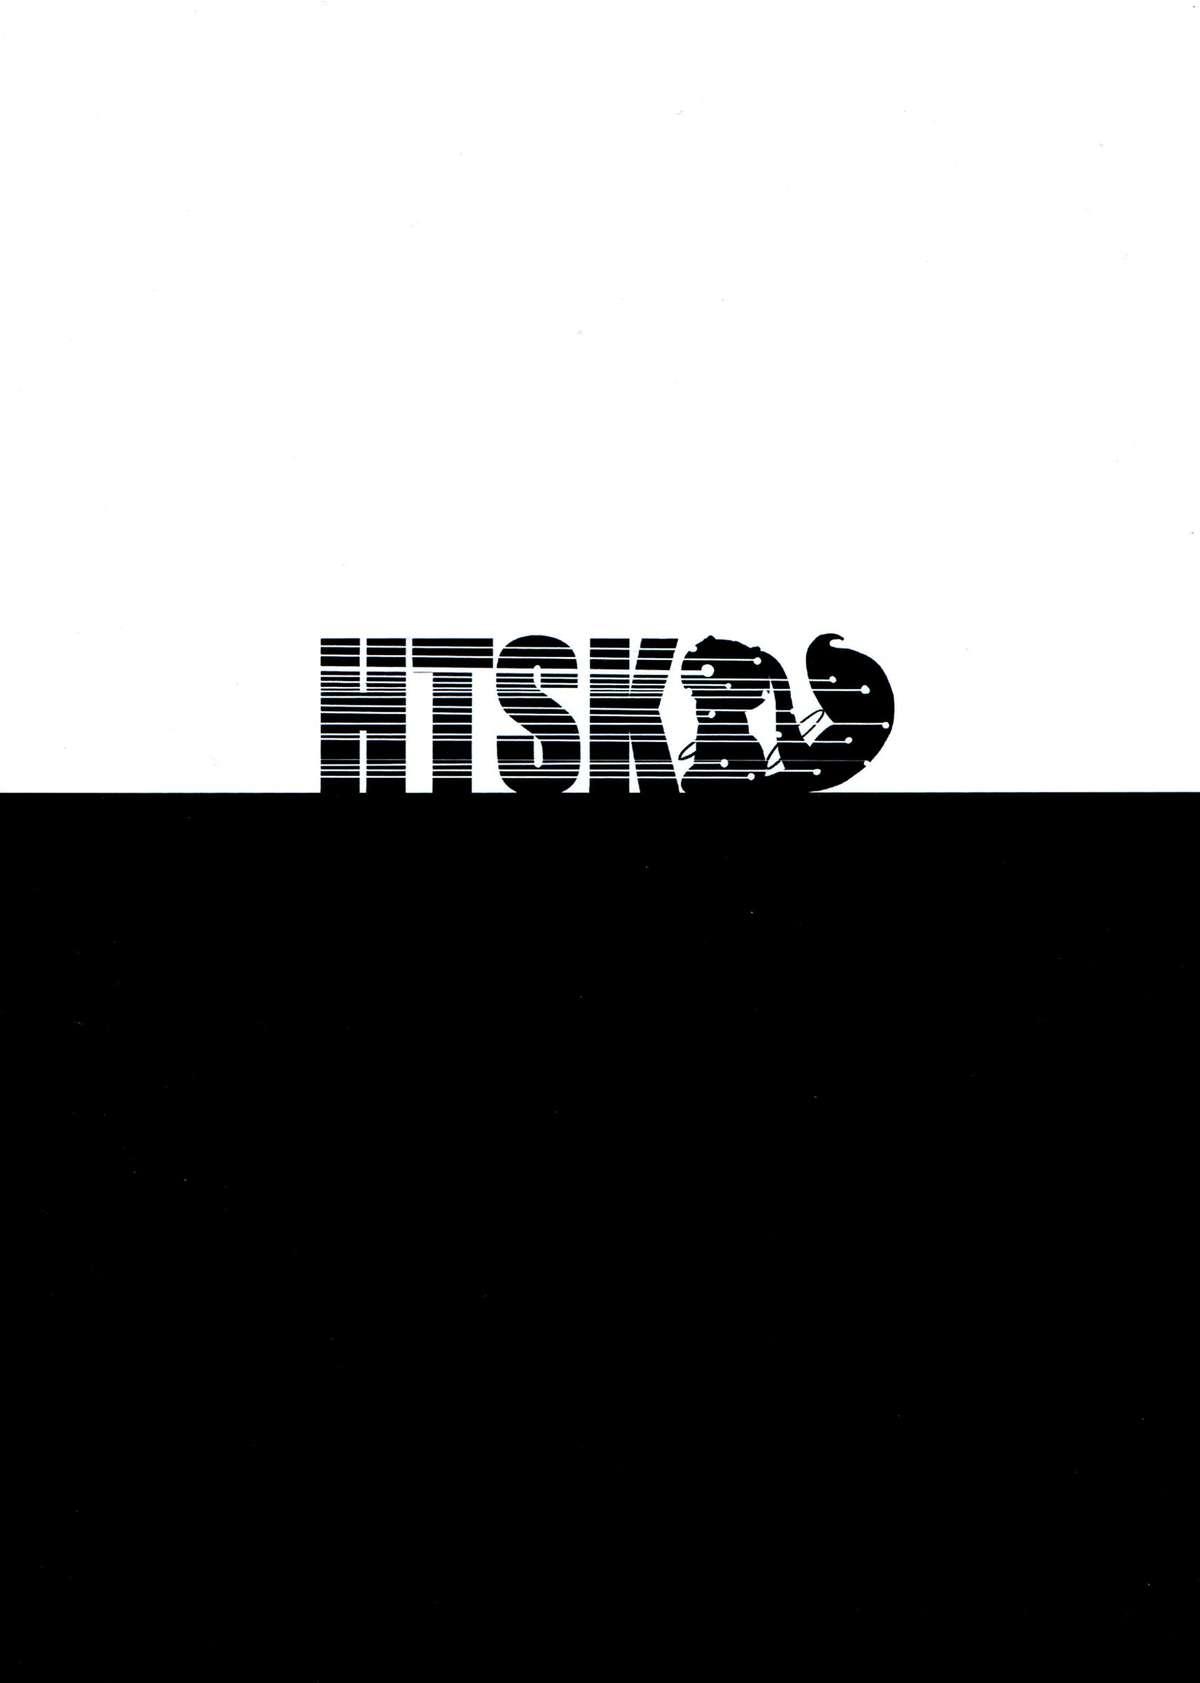 HTSK2.5 1